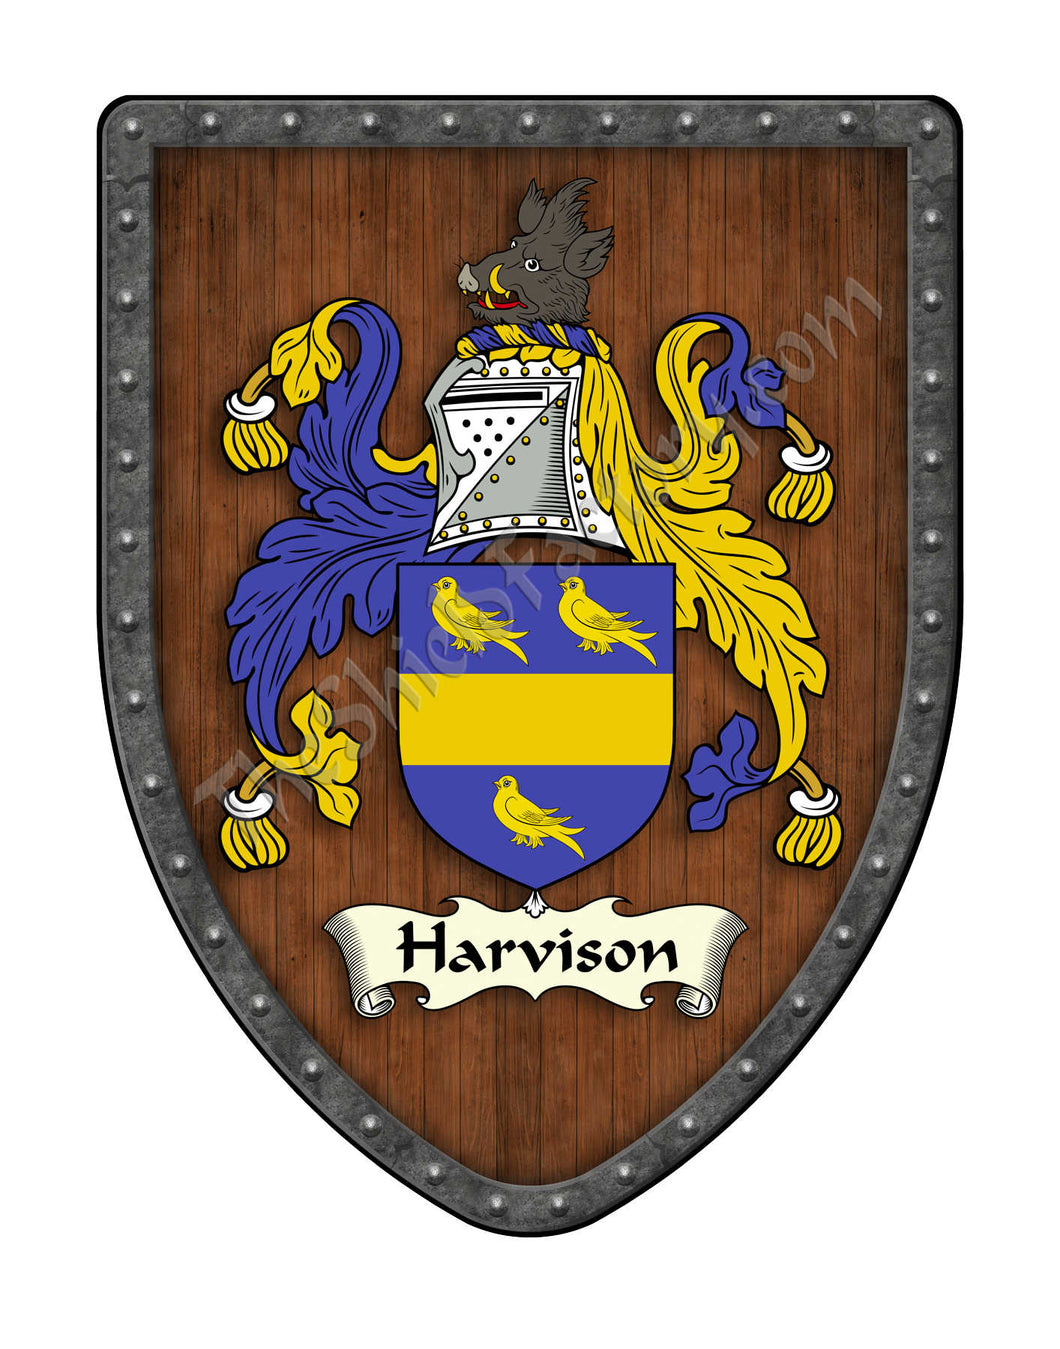 Harvison